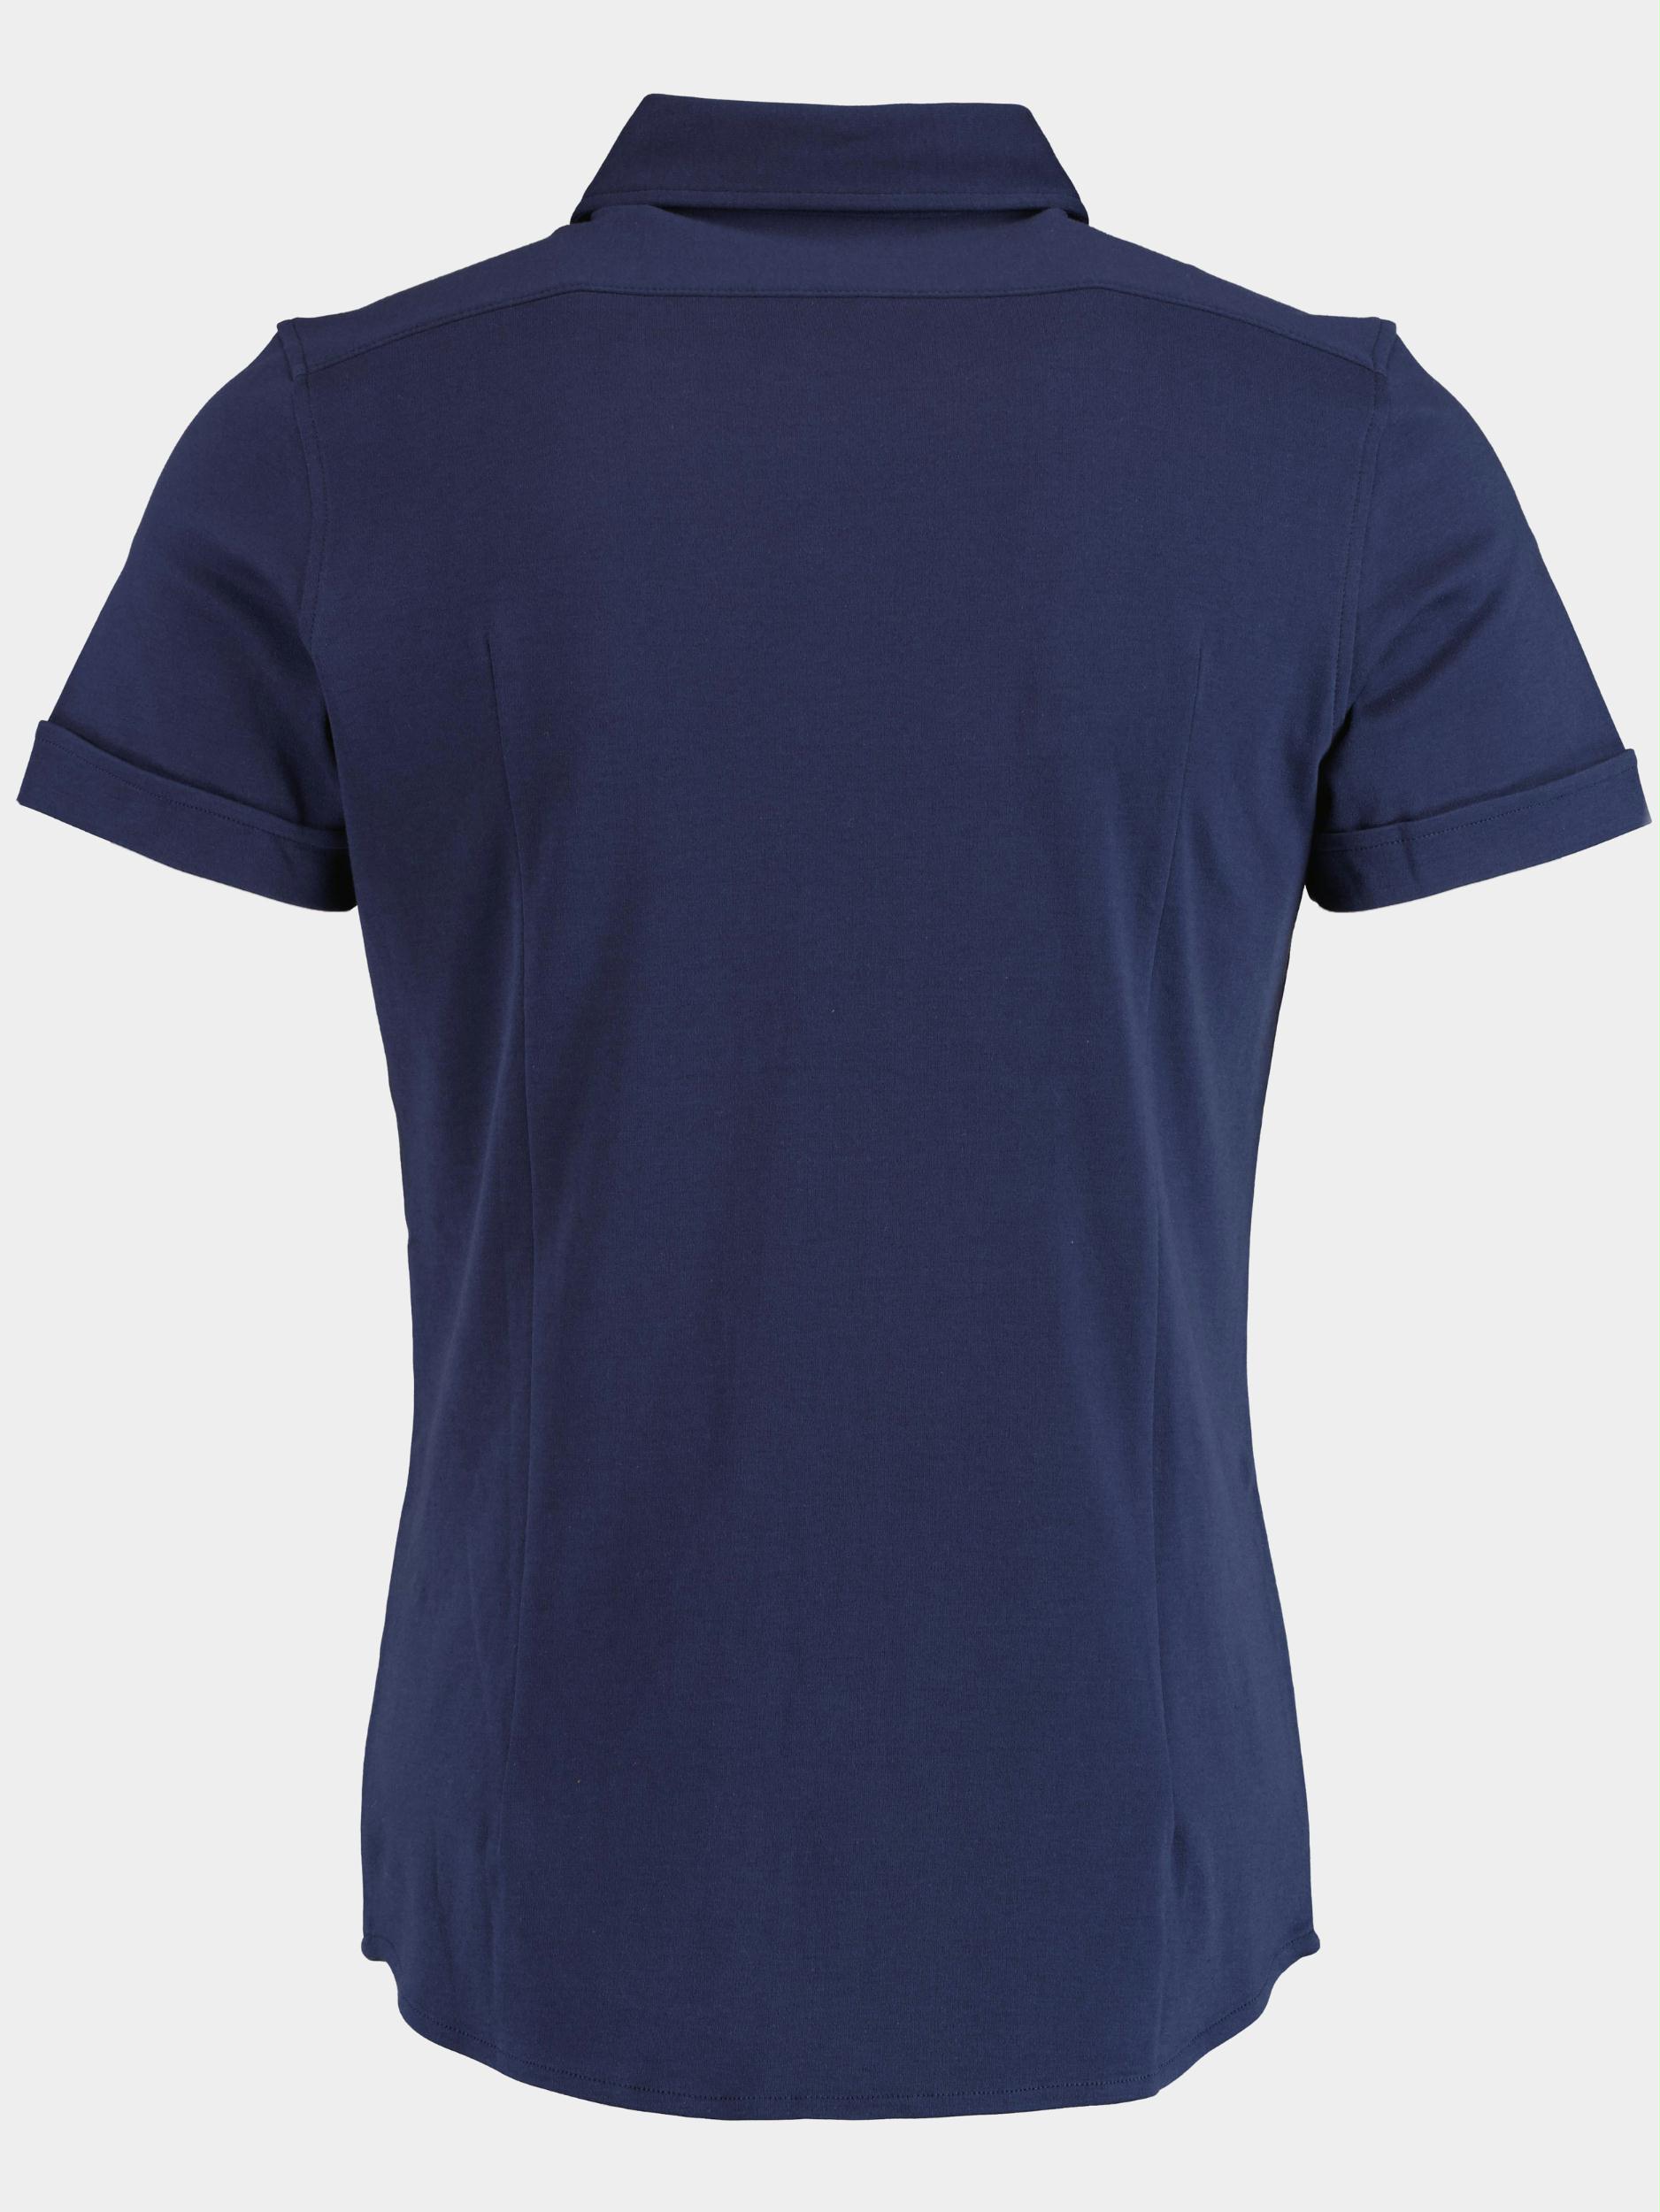 Born With Appetite Casual hemd korte mouw Blauw Earl Shirt Sl 22108EA28/290 navy